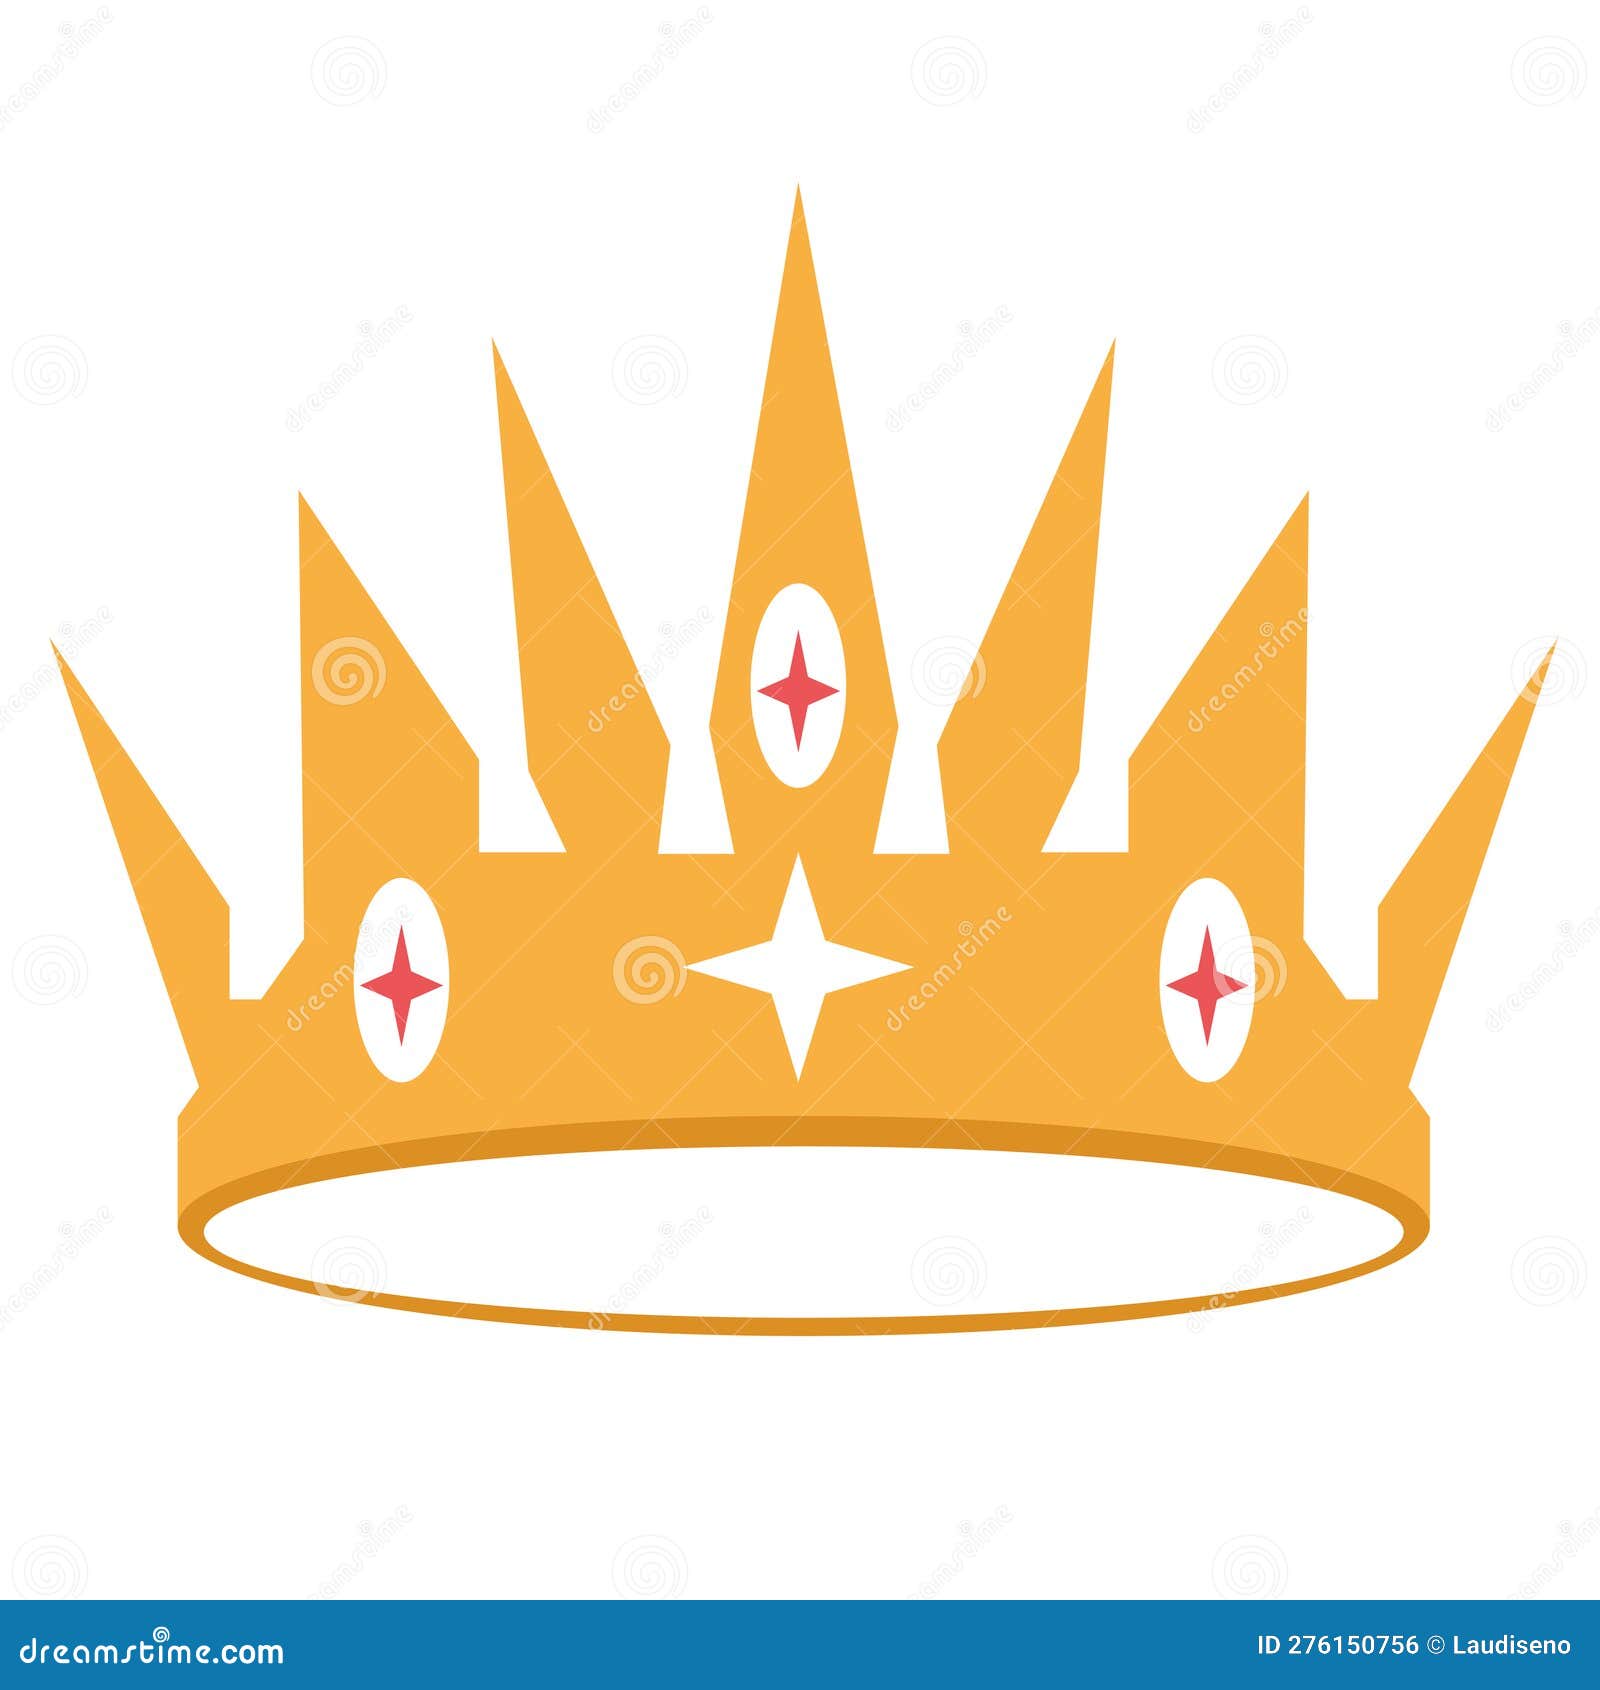 Icono de corona dorada aislado